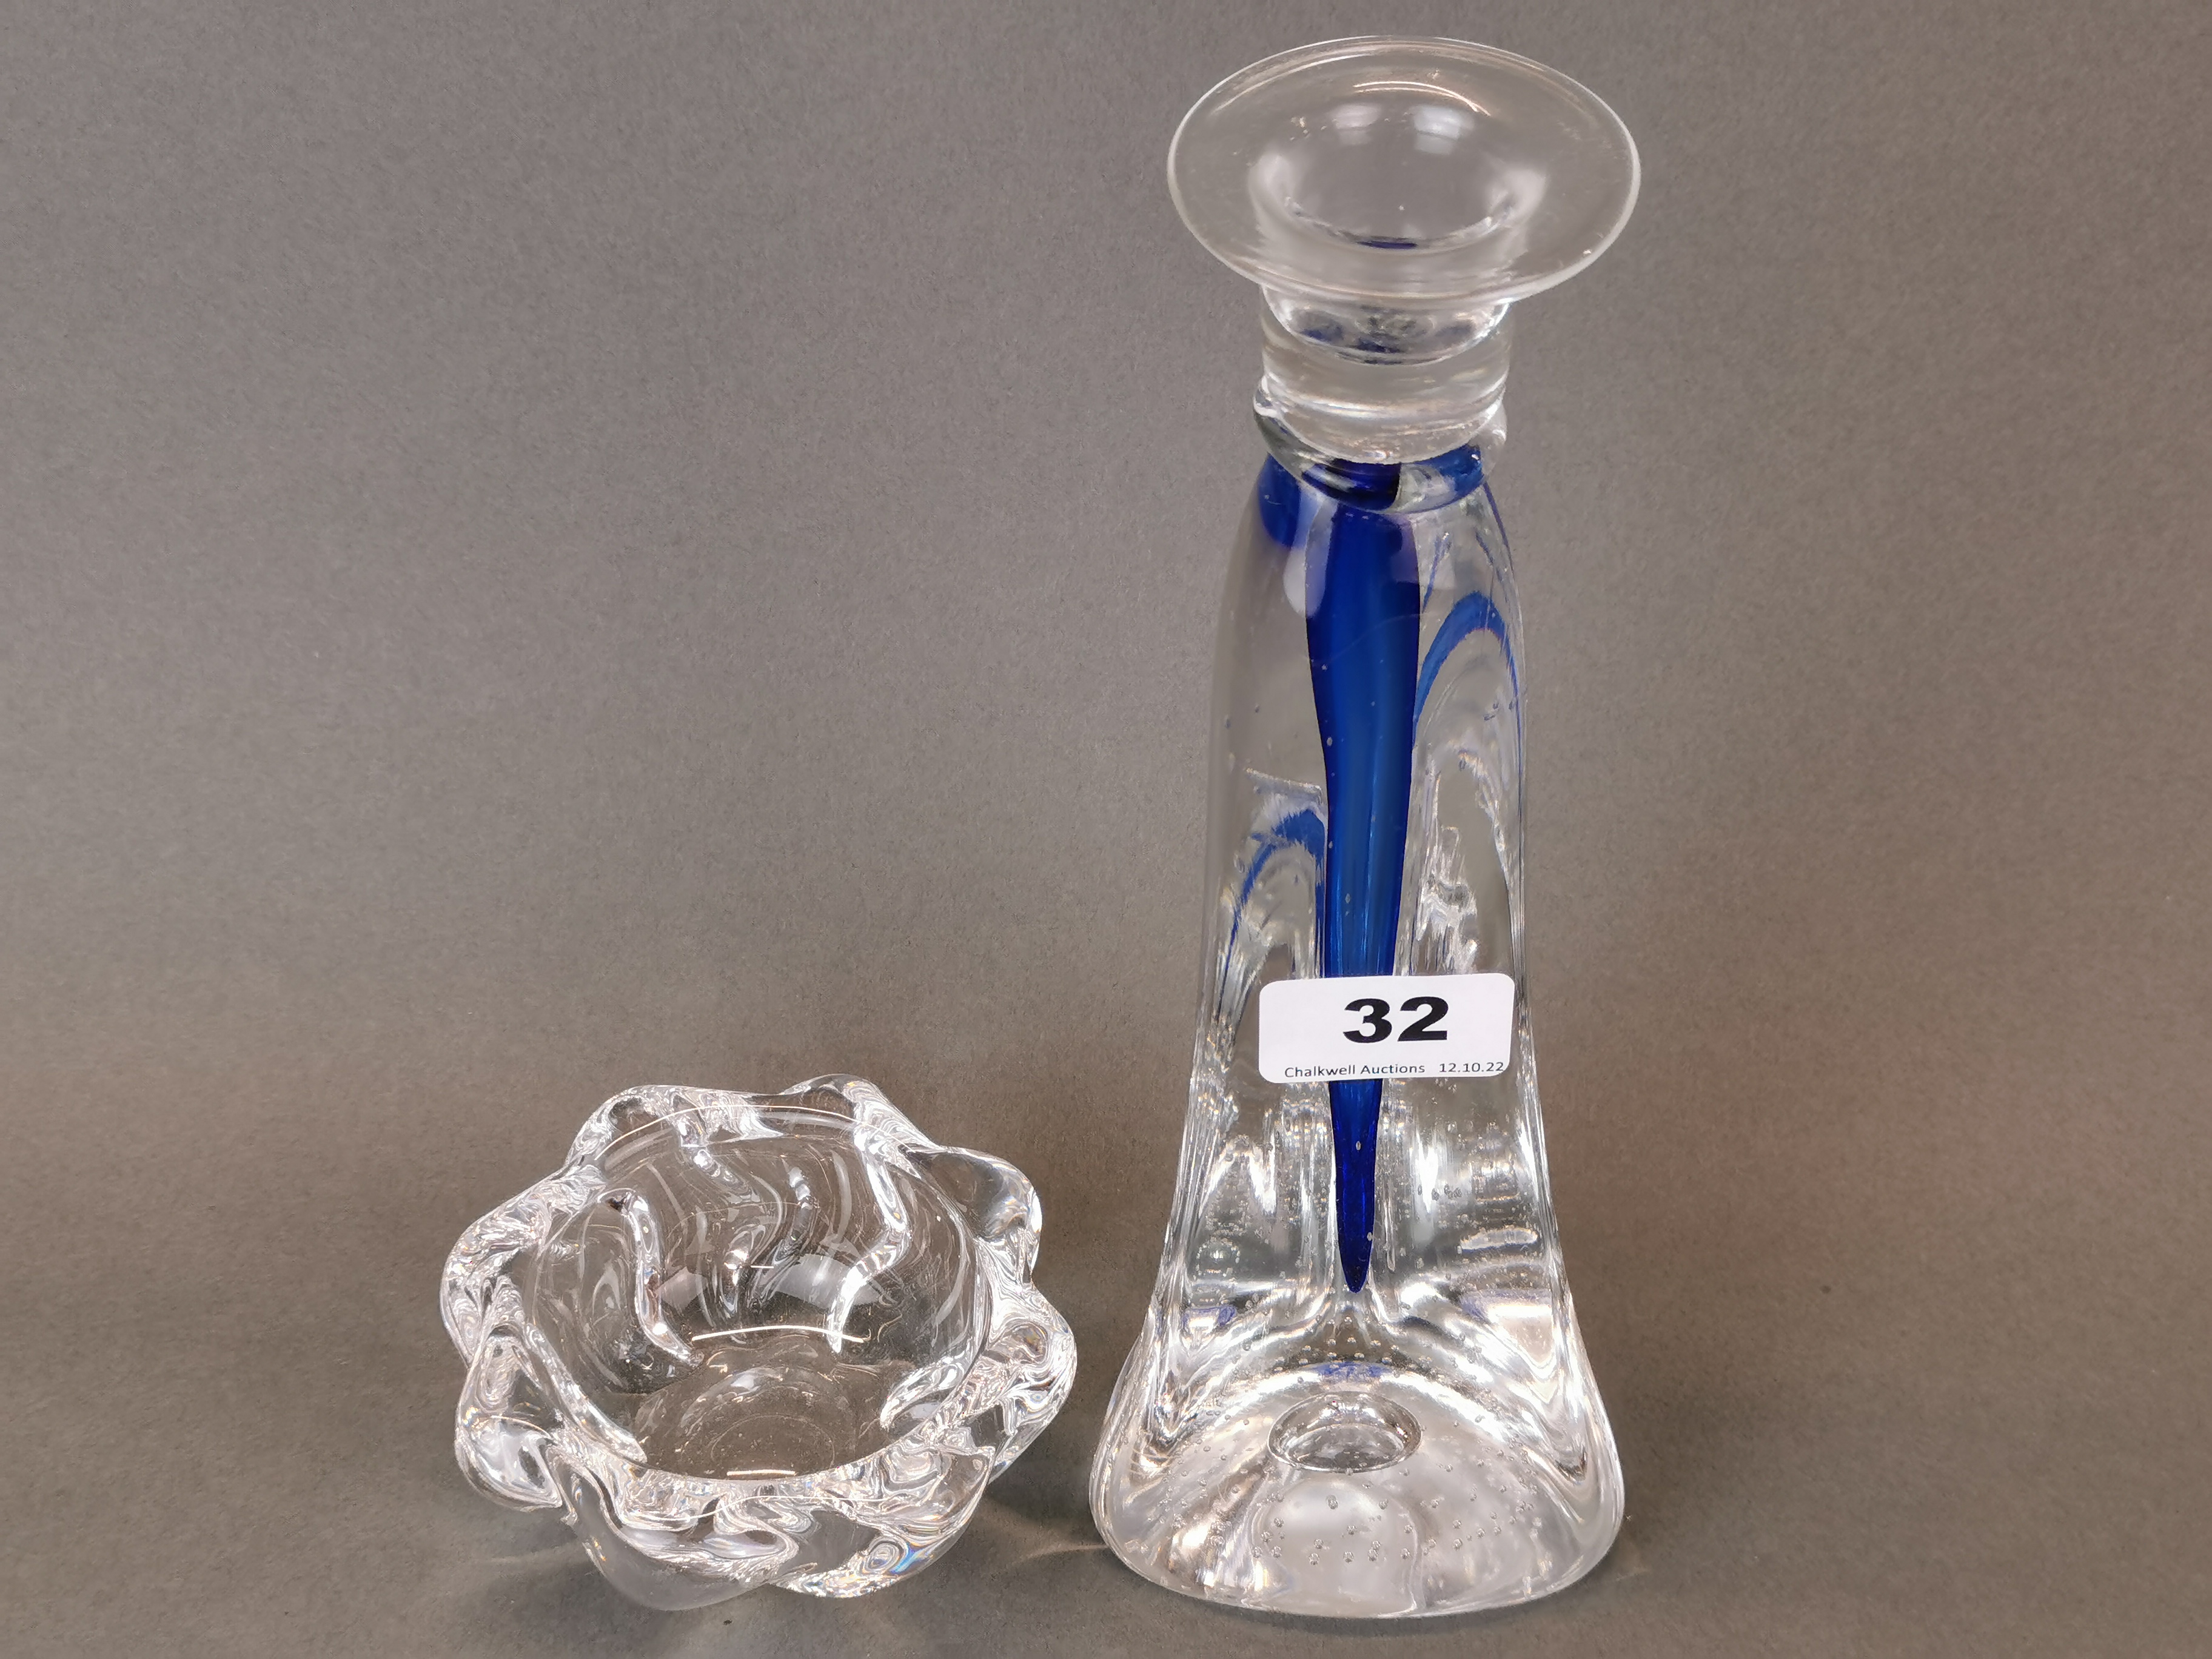 An Adam Jablonski Polish art glass candlestick, H. 26cm. Together with a signed Daum crystal bowl. - Image 2 of 4